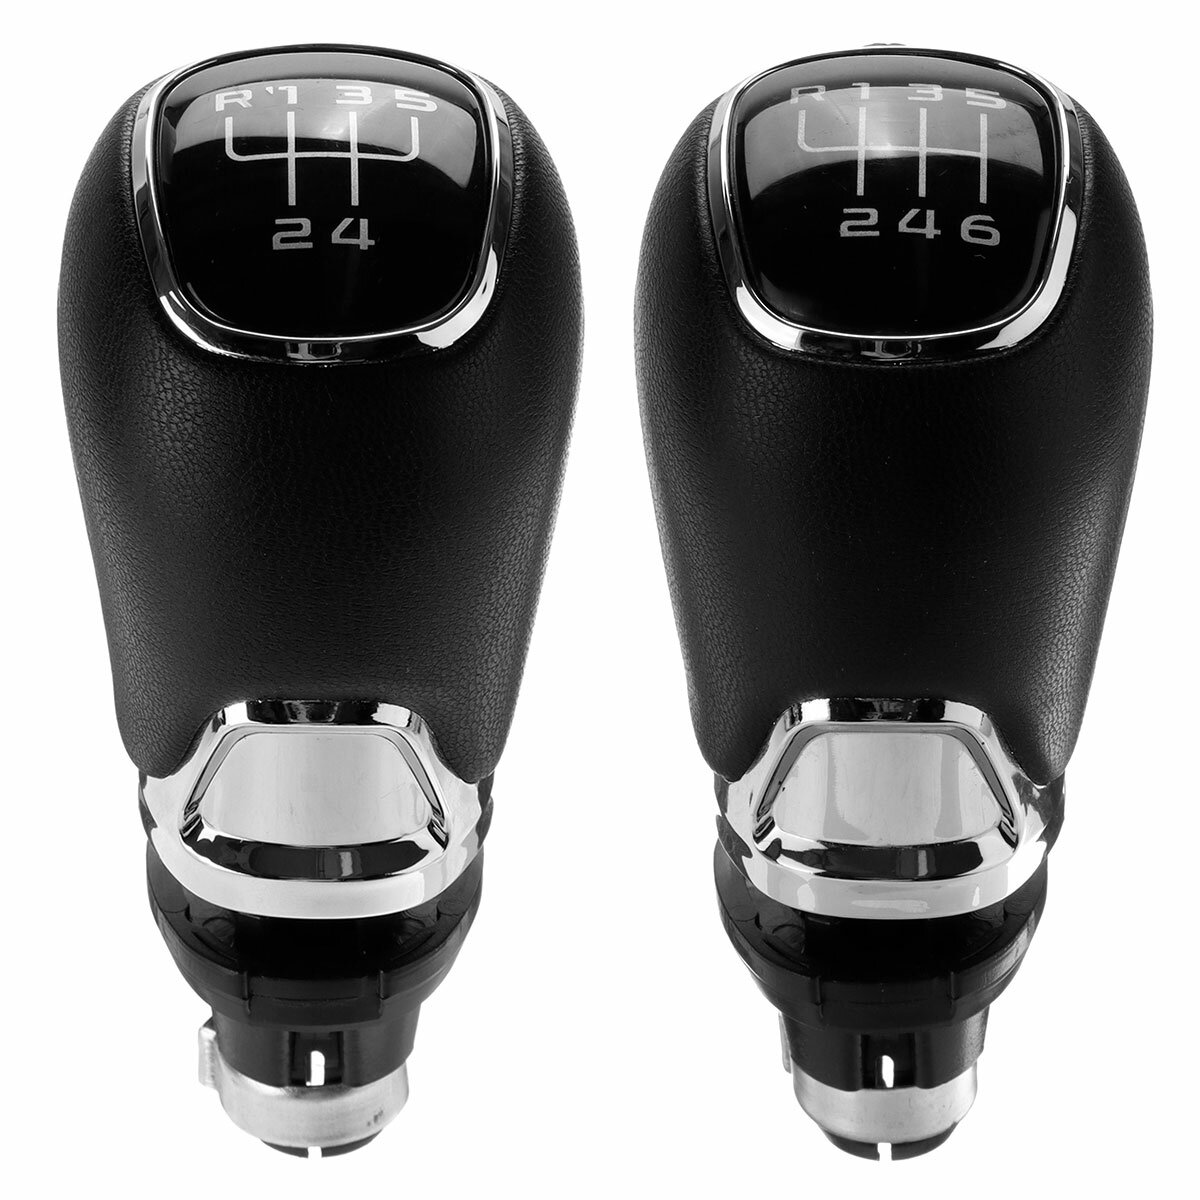 

5 6 Speed Car Gear Shift Knob For Skoda/Octavia A7 MK3 2013-2017 PU Leather Manual Shifter Lever Handle Gear Stick